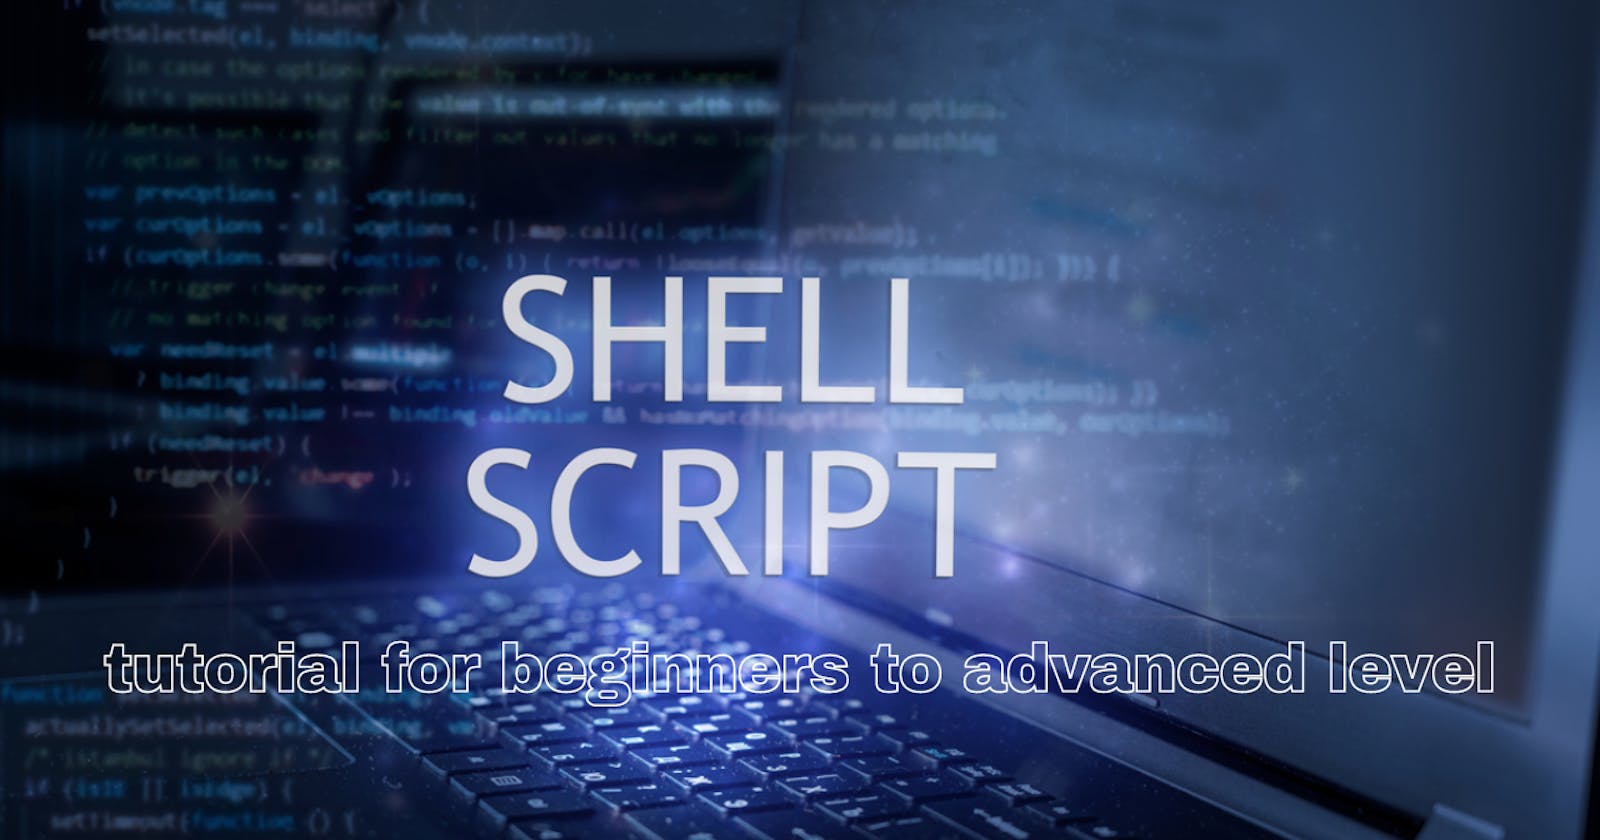 Shell Scripting Tutorial Beginners To Advanced